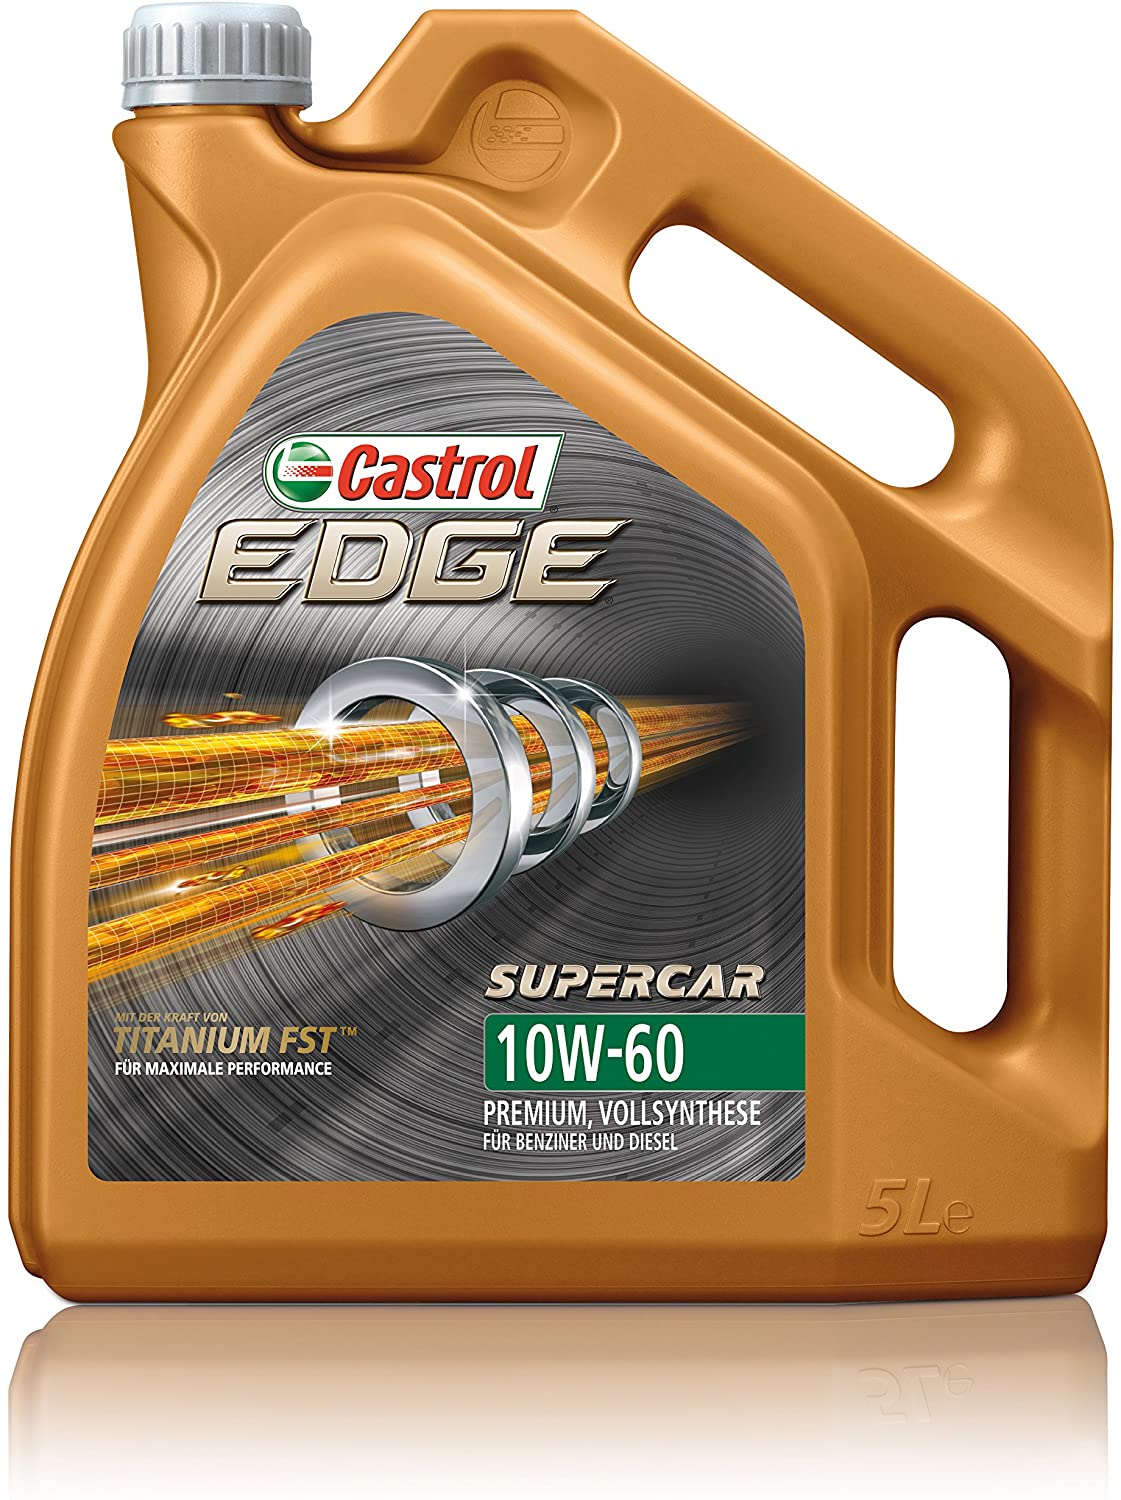 Aceite 10W60 Castrol Edge Supercar 4 Litros